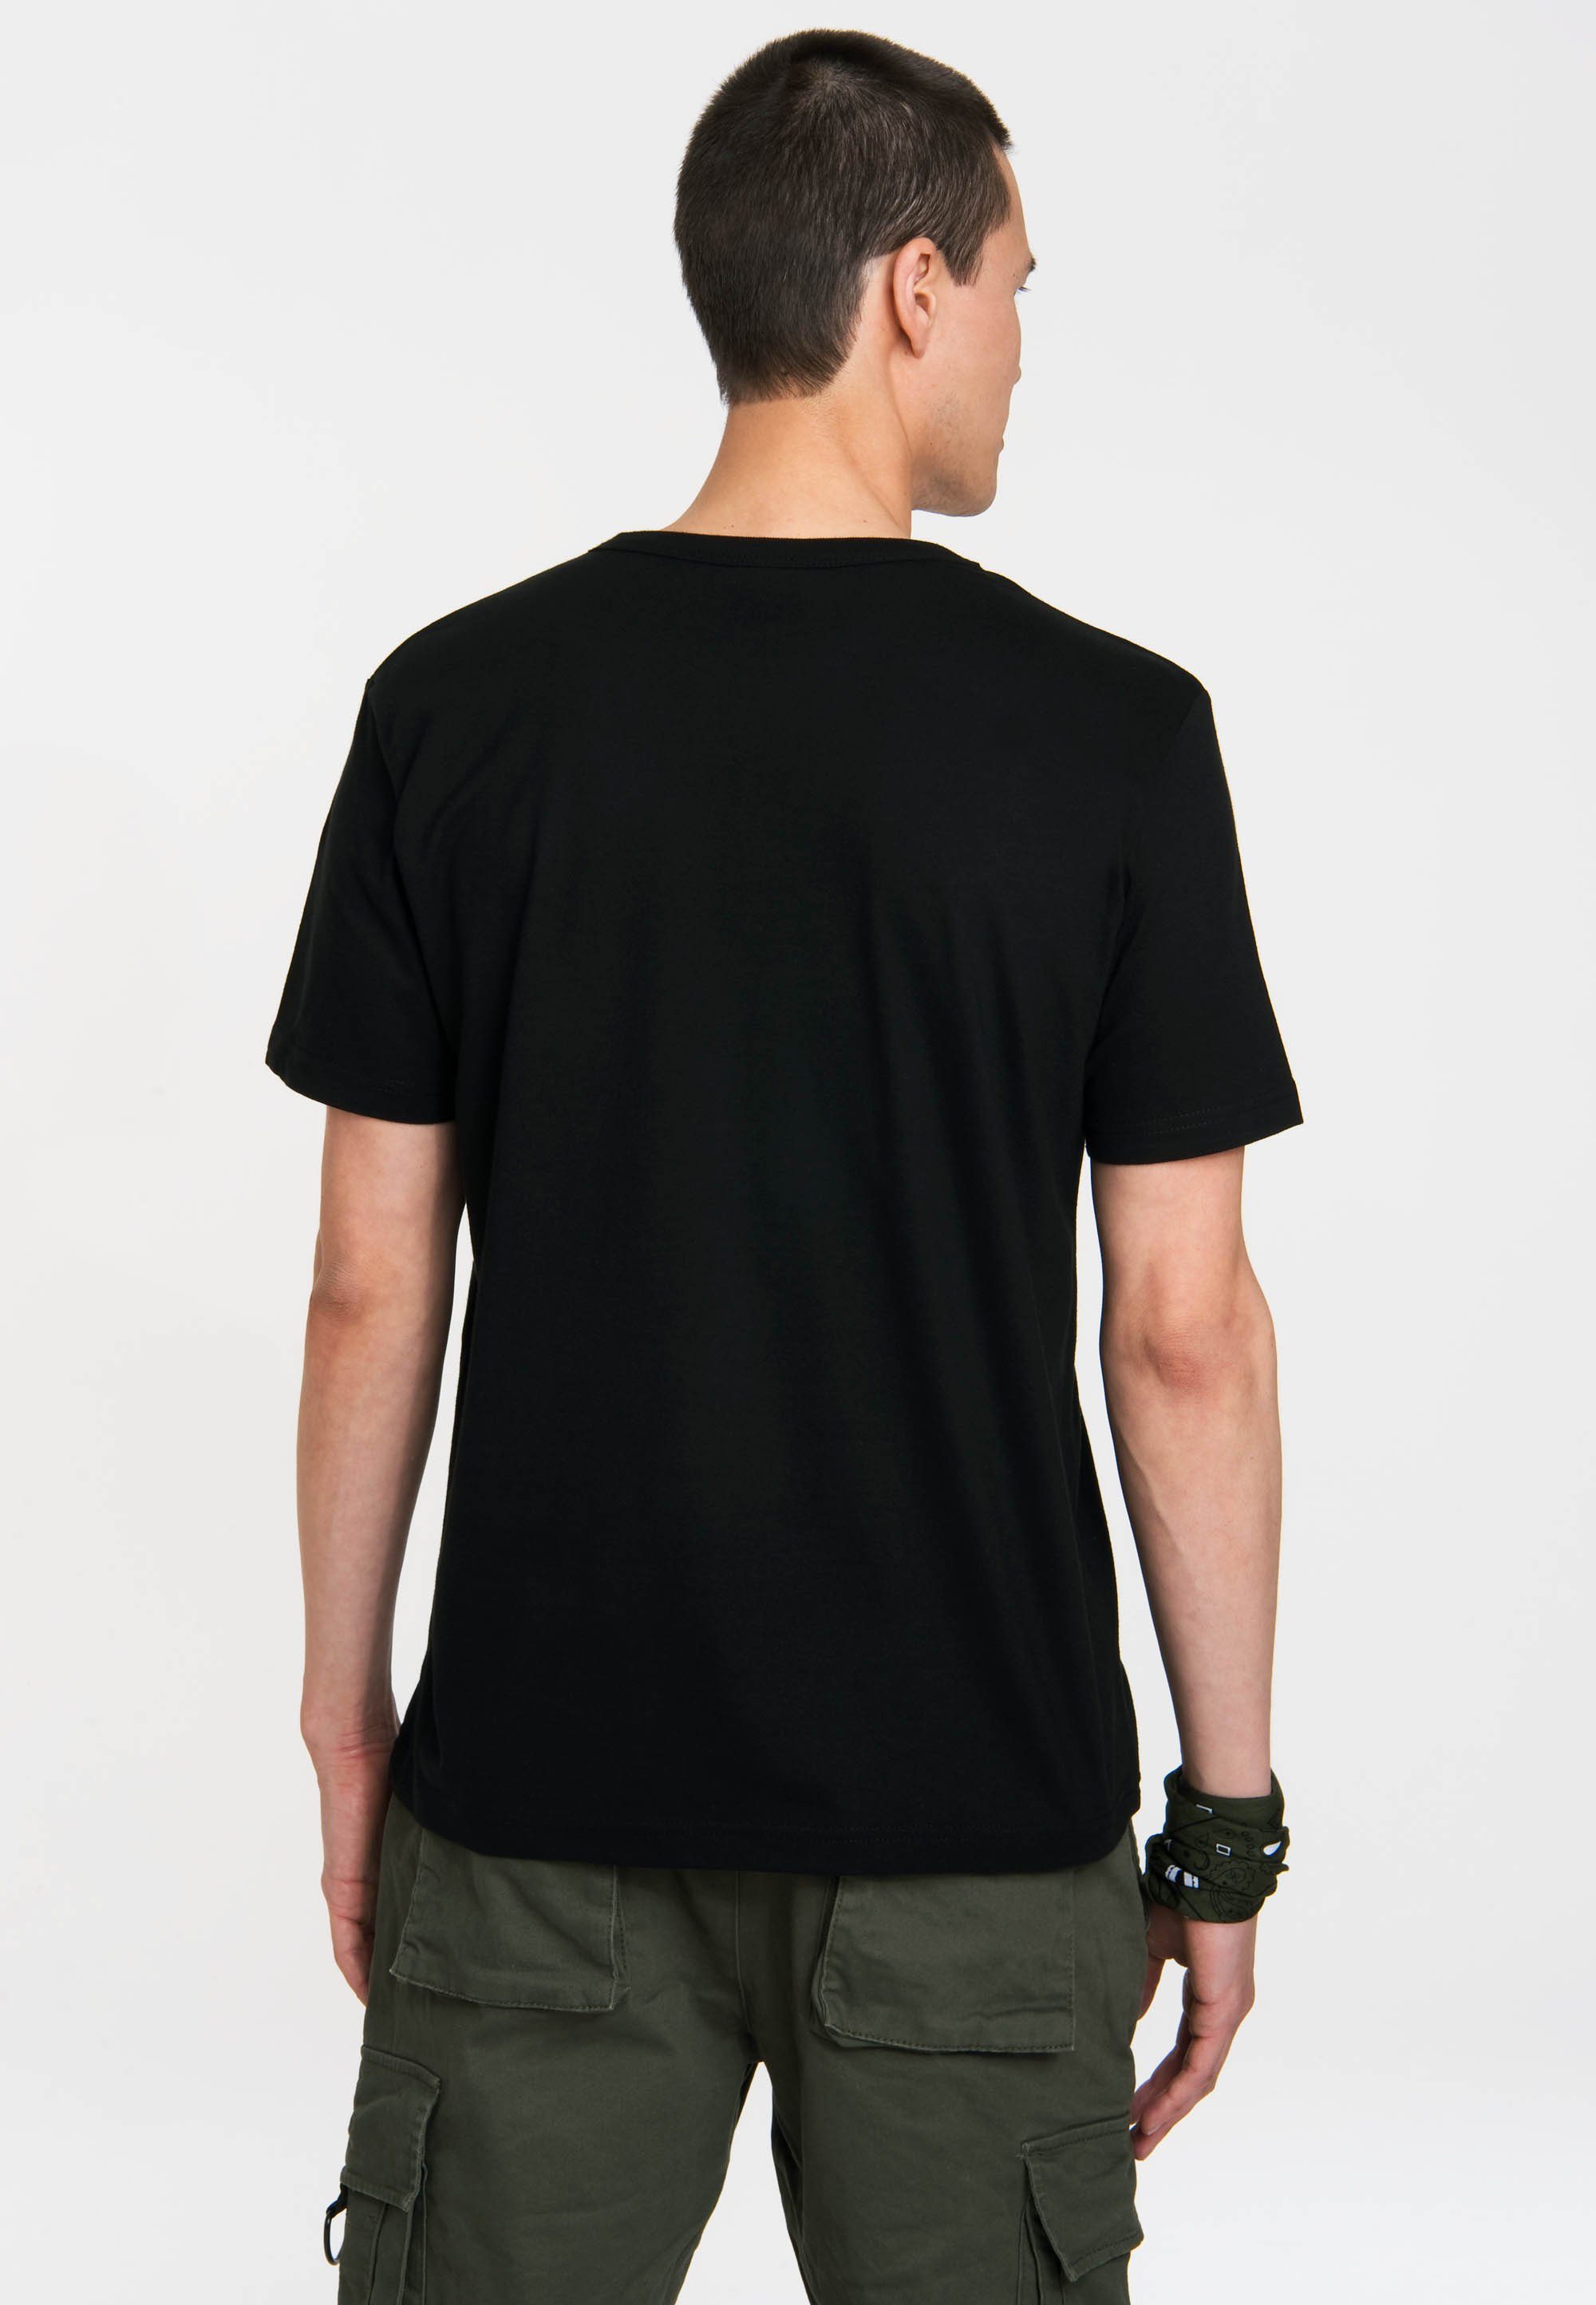 mit LOGOSHIRT coolem Logo T-Shirt Slytherin Frontdruck